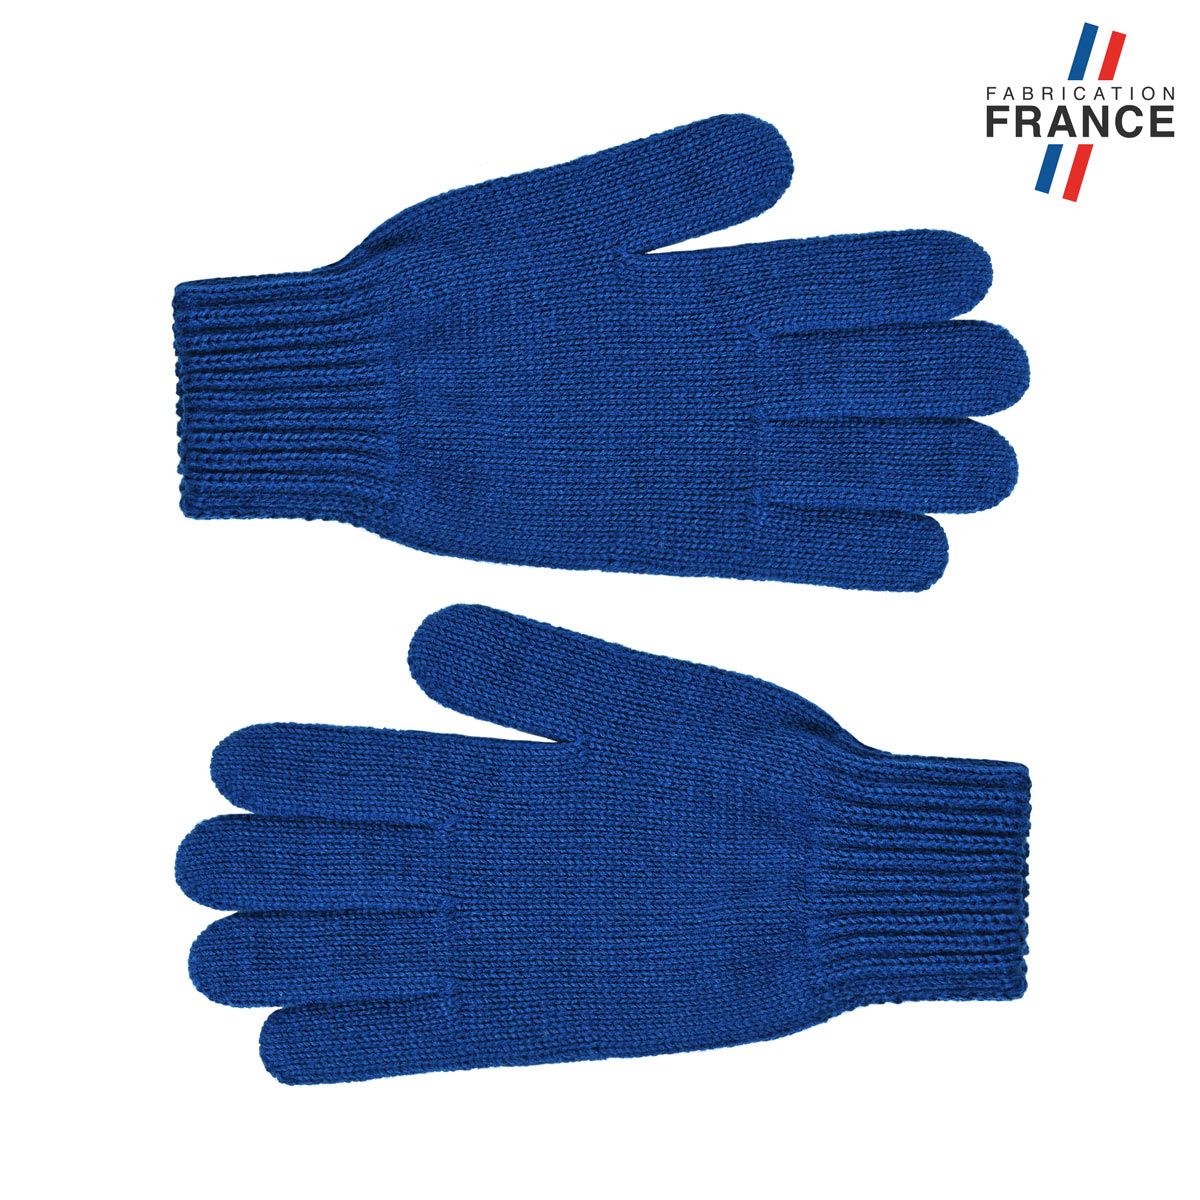 GA-00033_A12-1FR_Paire-gants_femme-bleu-fabrication-francaise